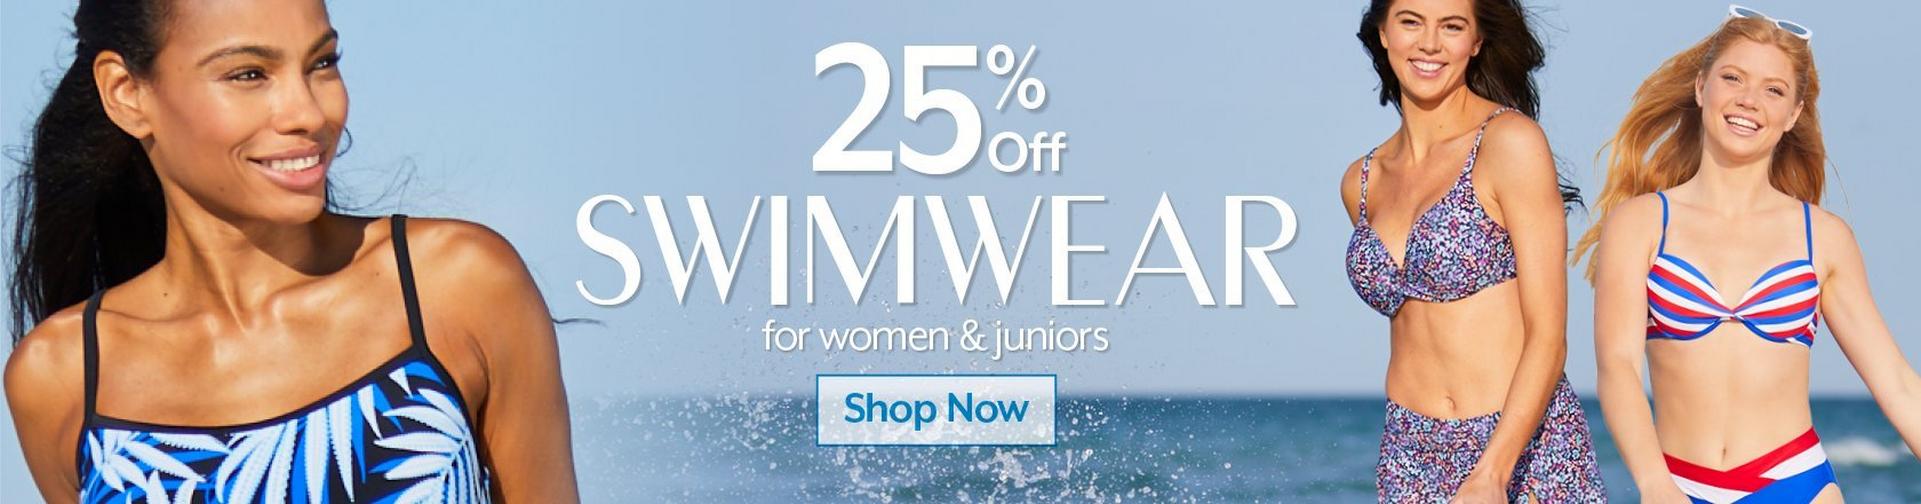 25% Off Swimwear & cover-ups for men, women & juniors